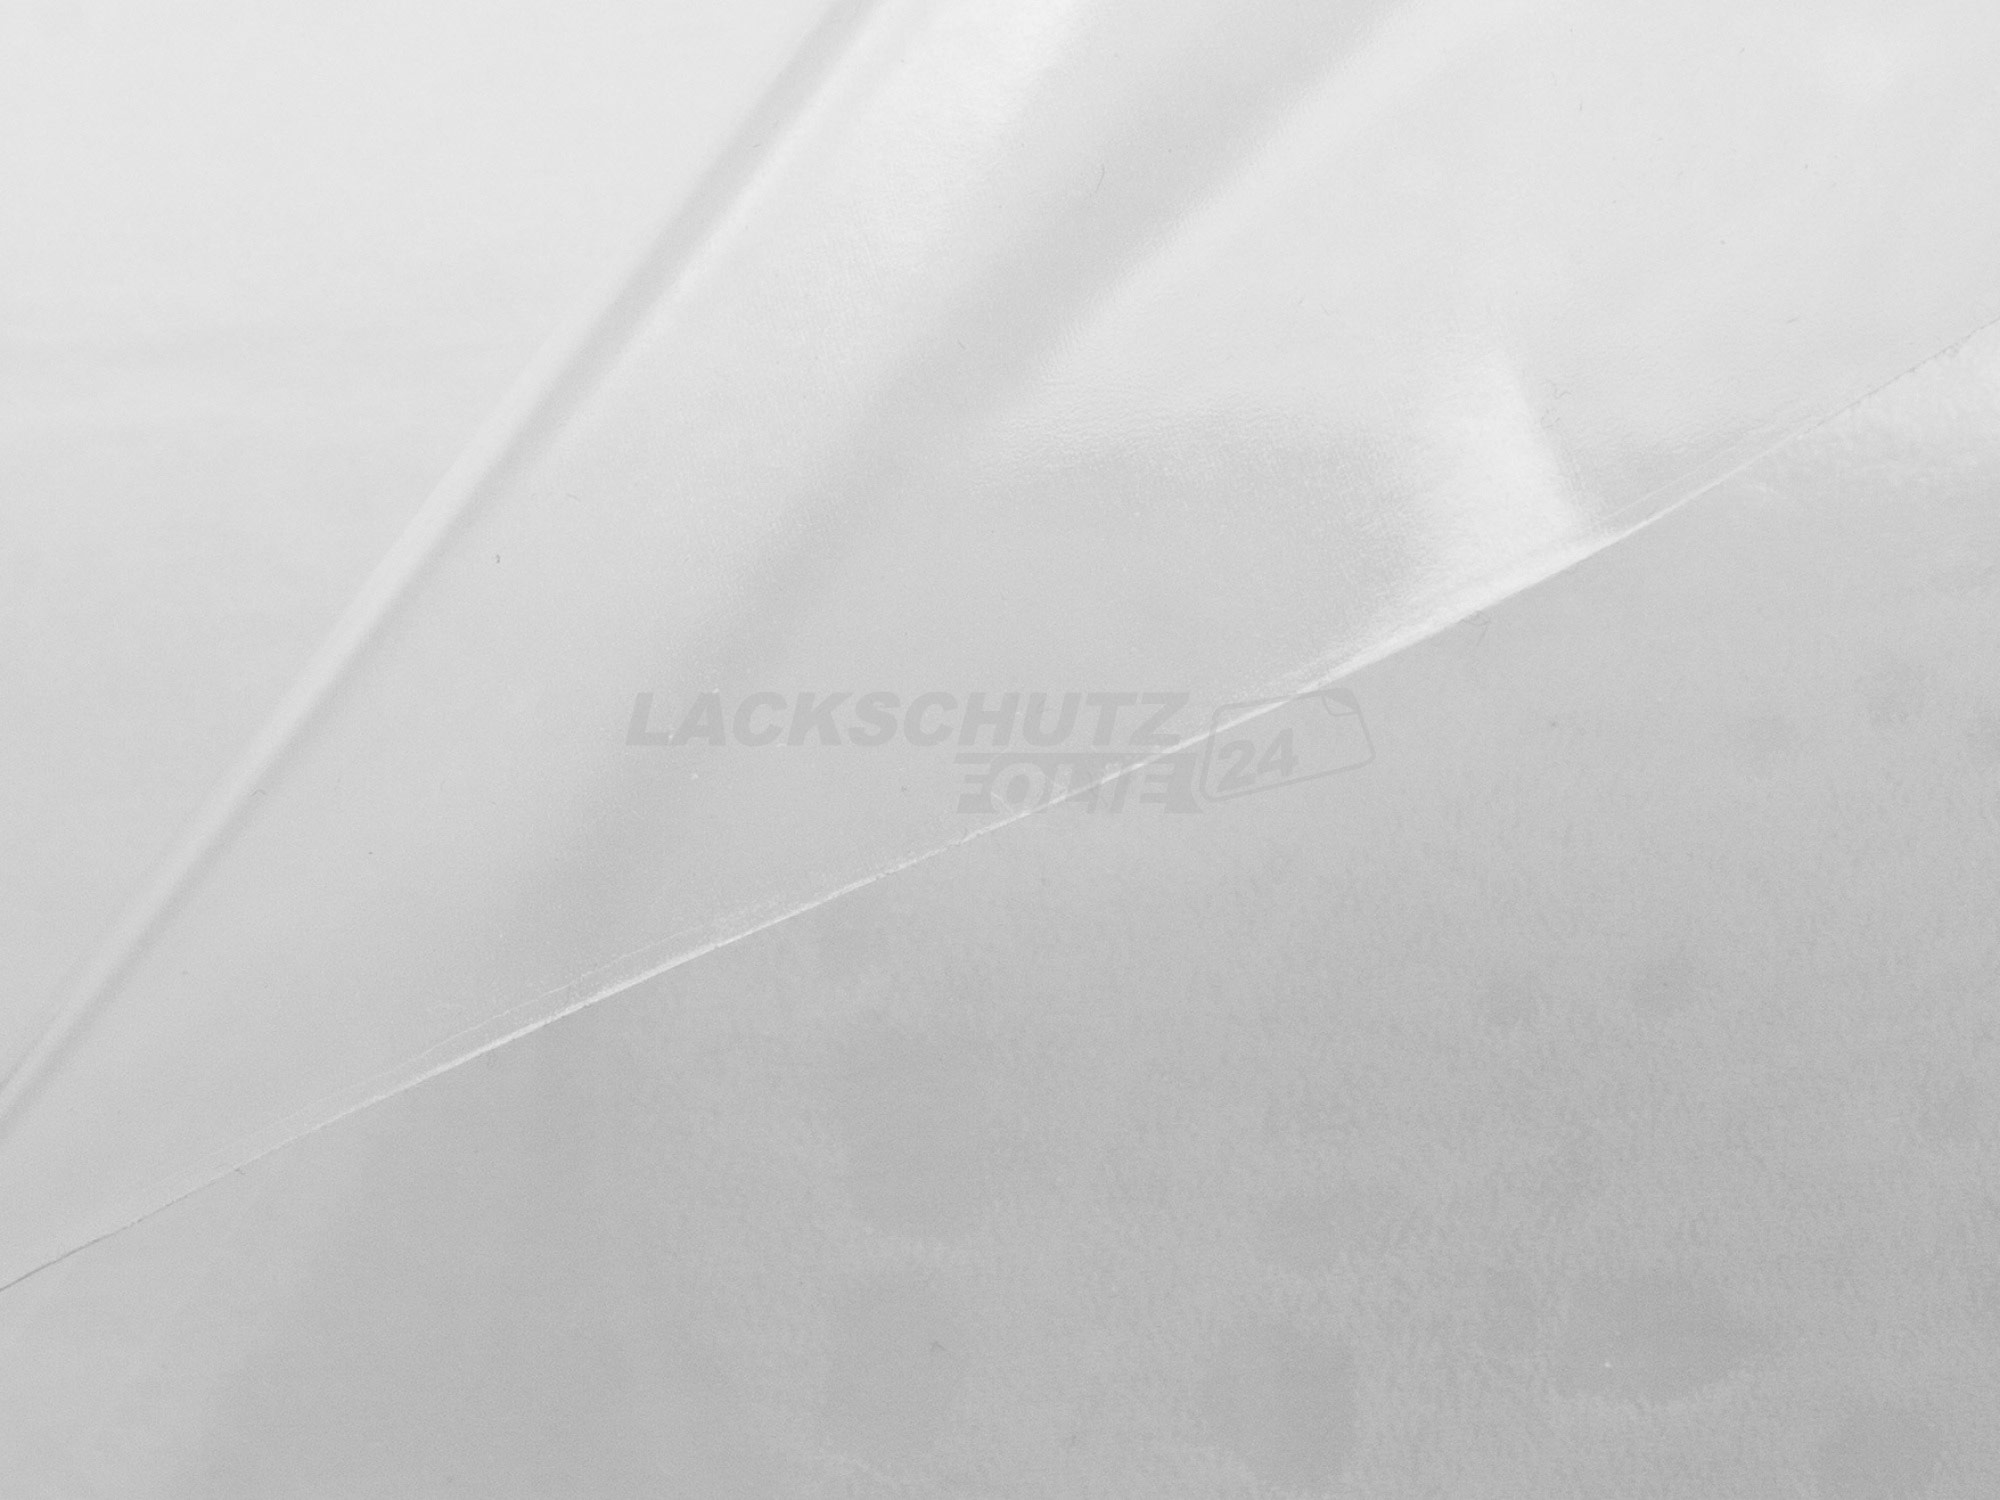 Ladekantenschutzfolie - Transparent Glatt Hochglänzend 240 µm stark für Audi A4 Cabrio B7, Typ 8E, BJ 2006-2009